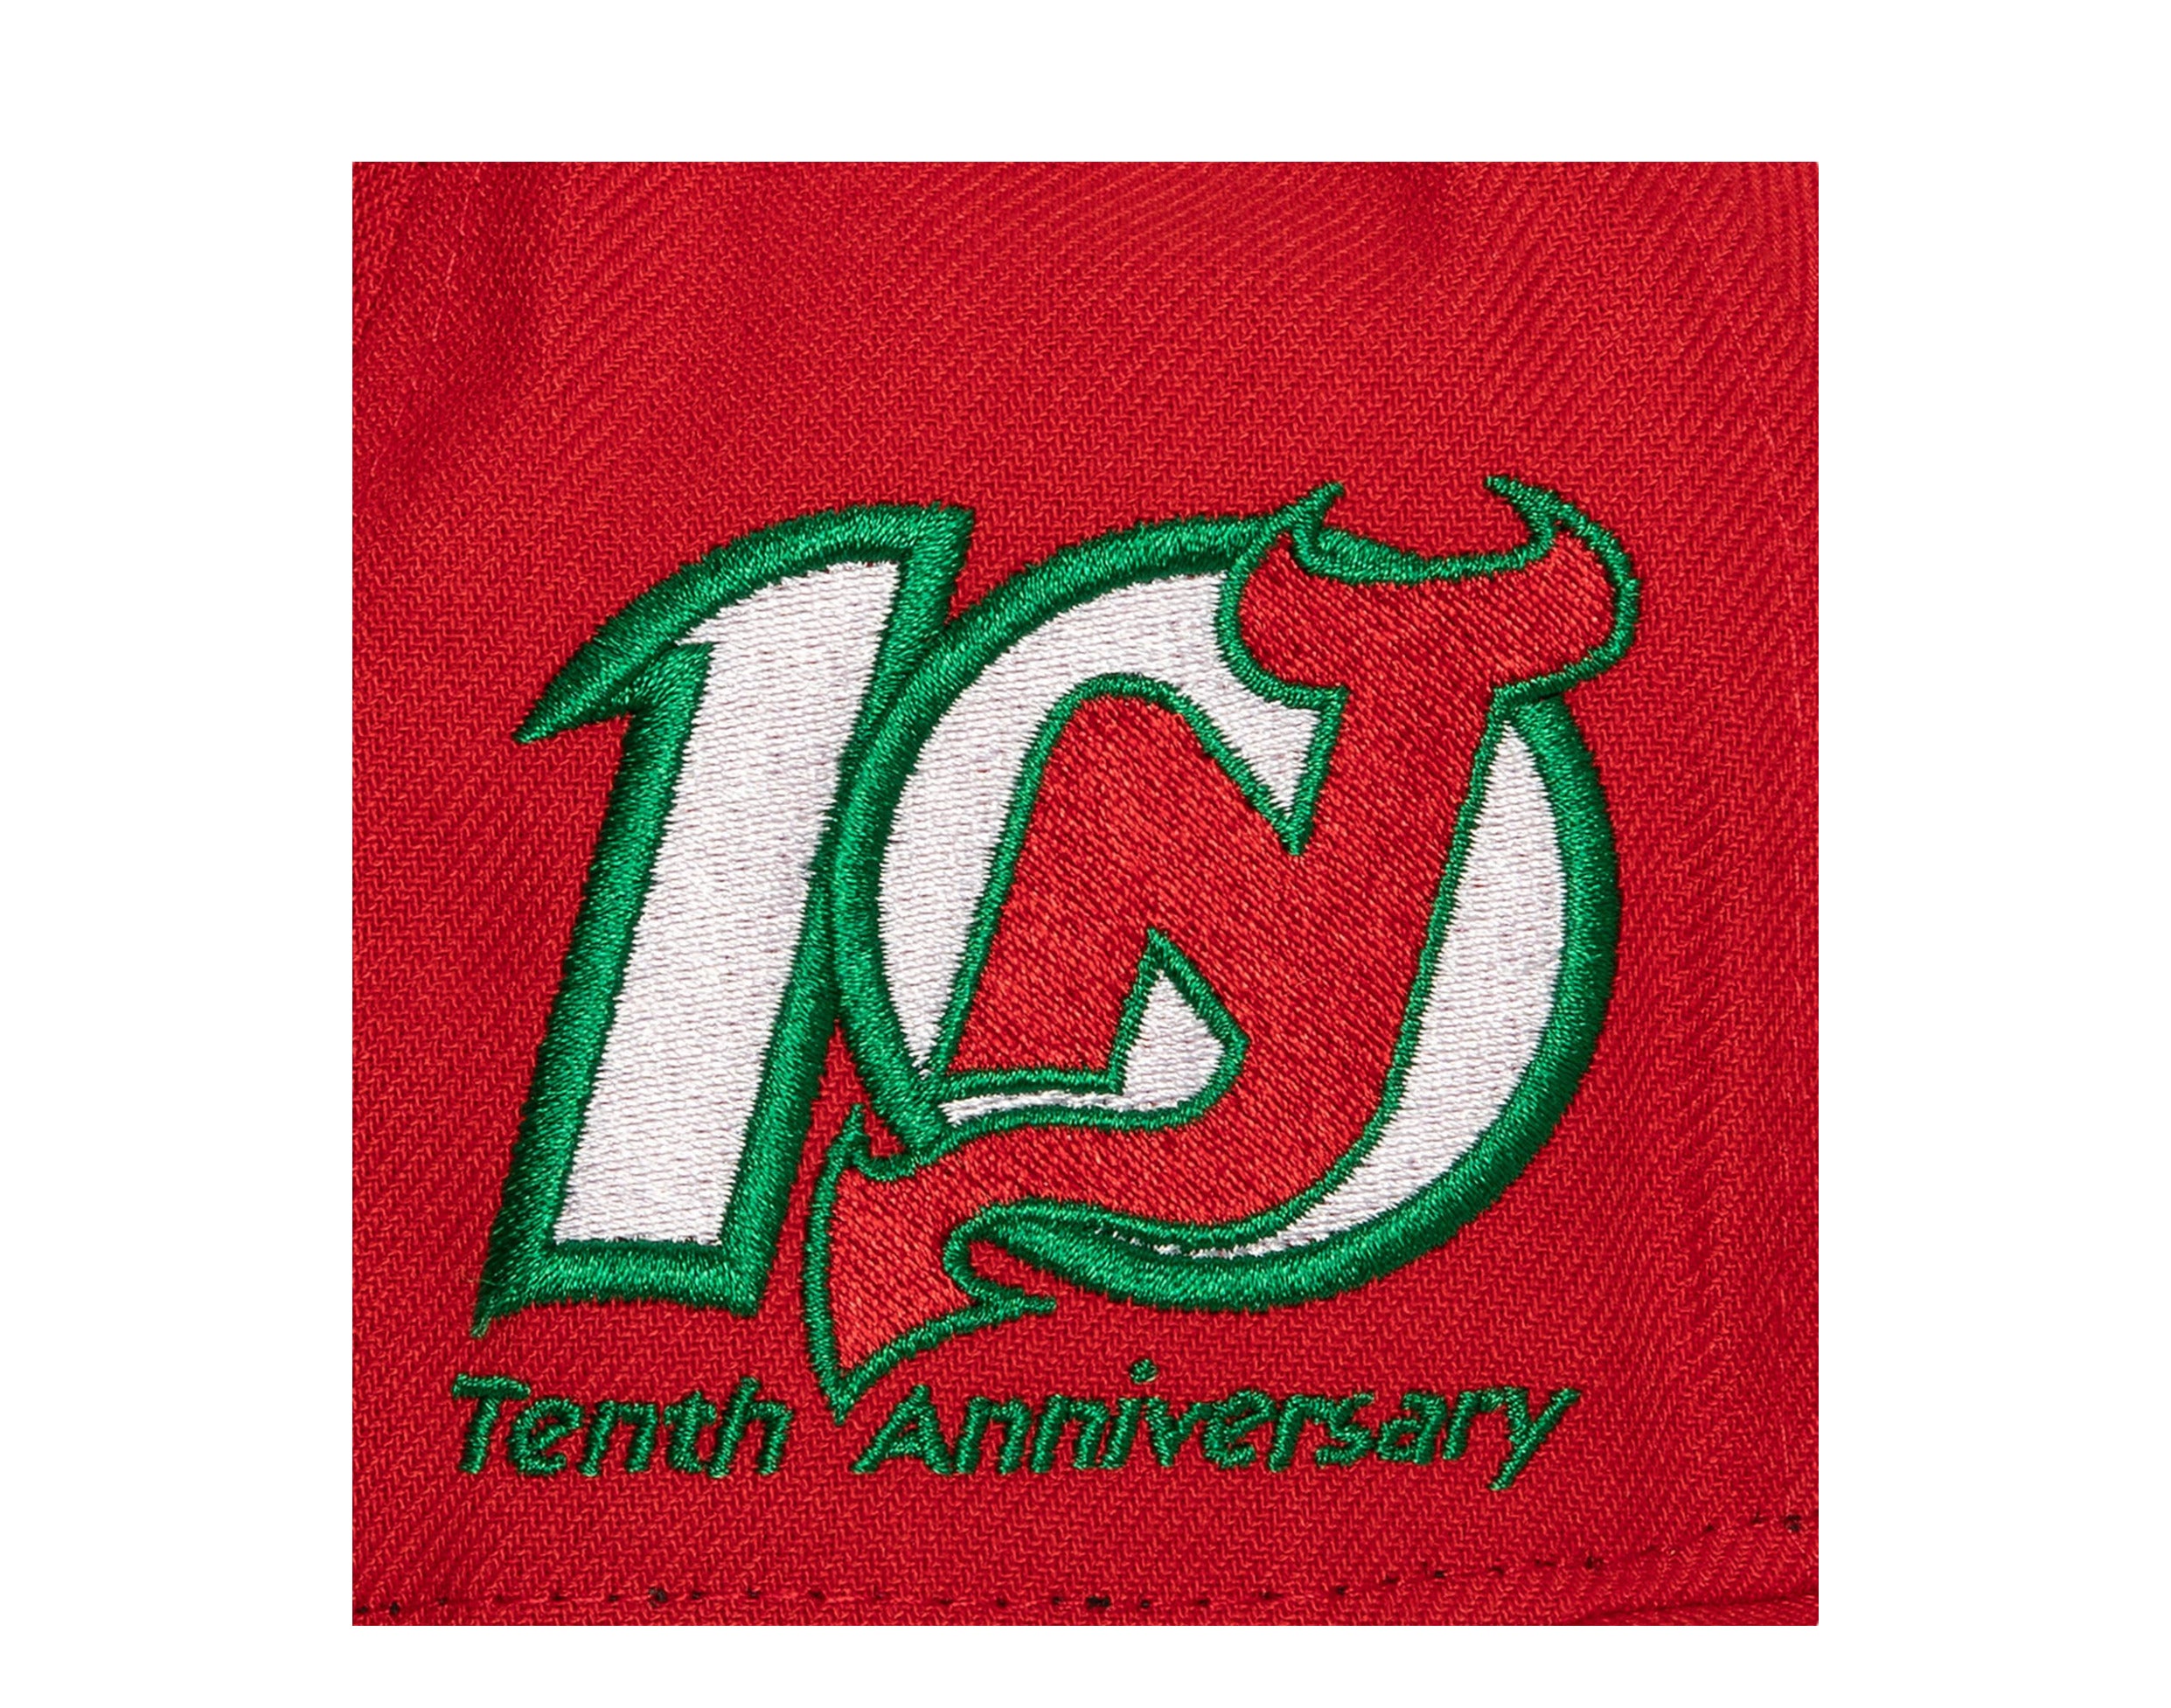 New Jersey Devils Logo - Nj Devils Logo - Nhl Logo - Nhl Tea - Inspire  Uplift